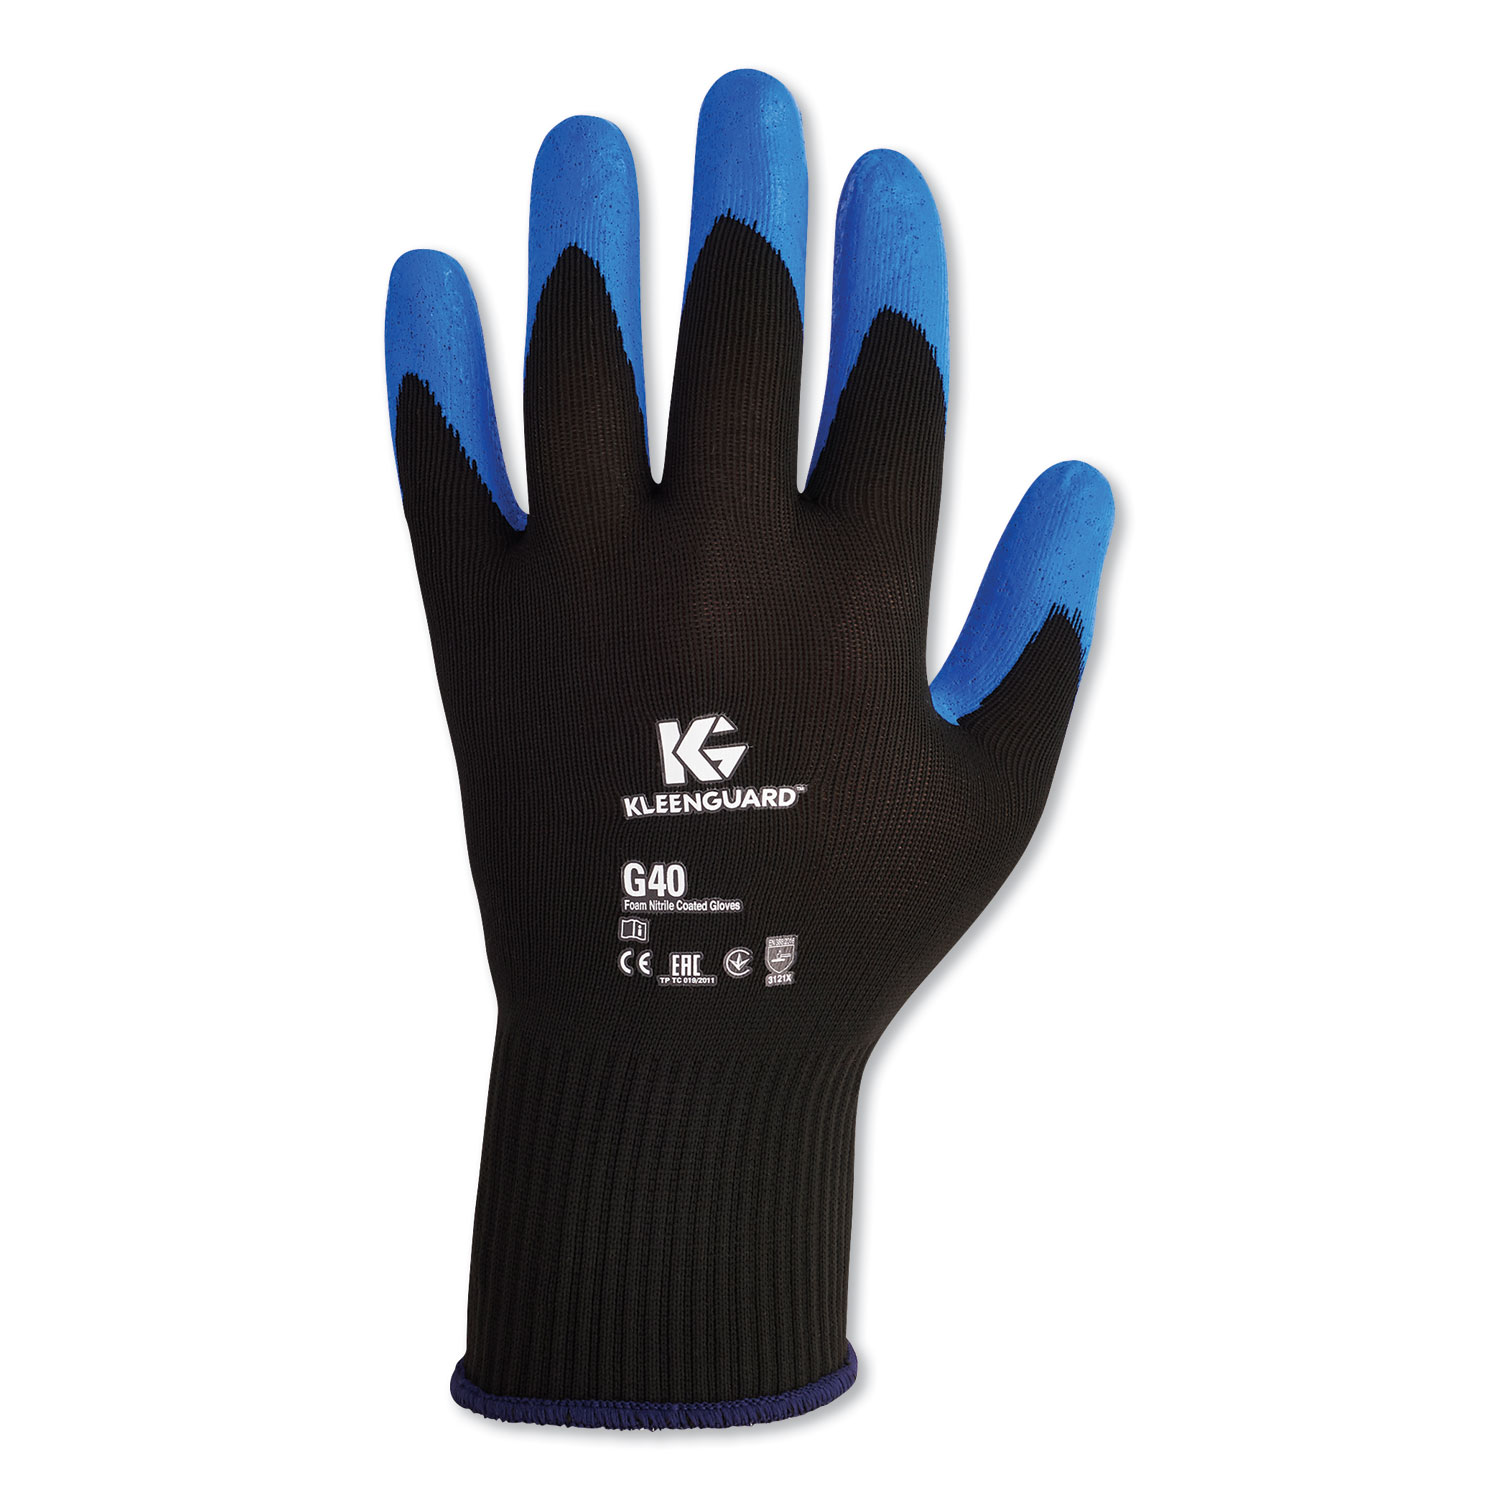  KleenGuard 40227 G40 Nitrile Coated Gloves, 240 mm Length, Large/Size 9, Blue, 12 Pairs (KCC40227) 